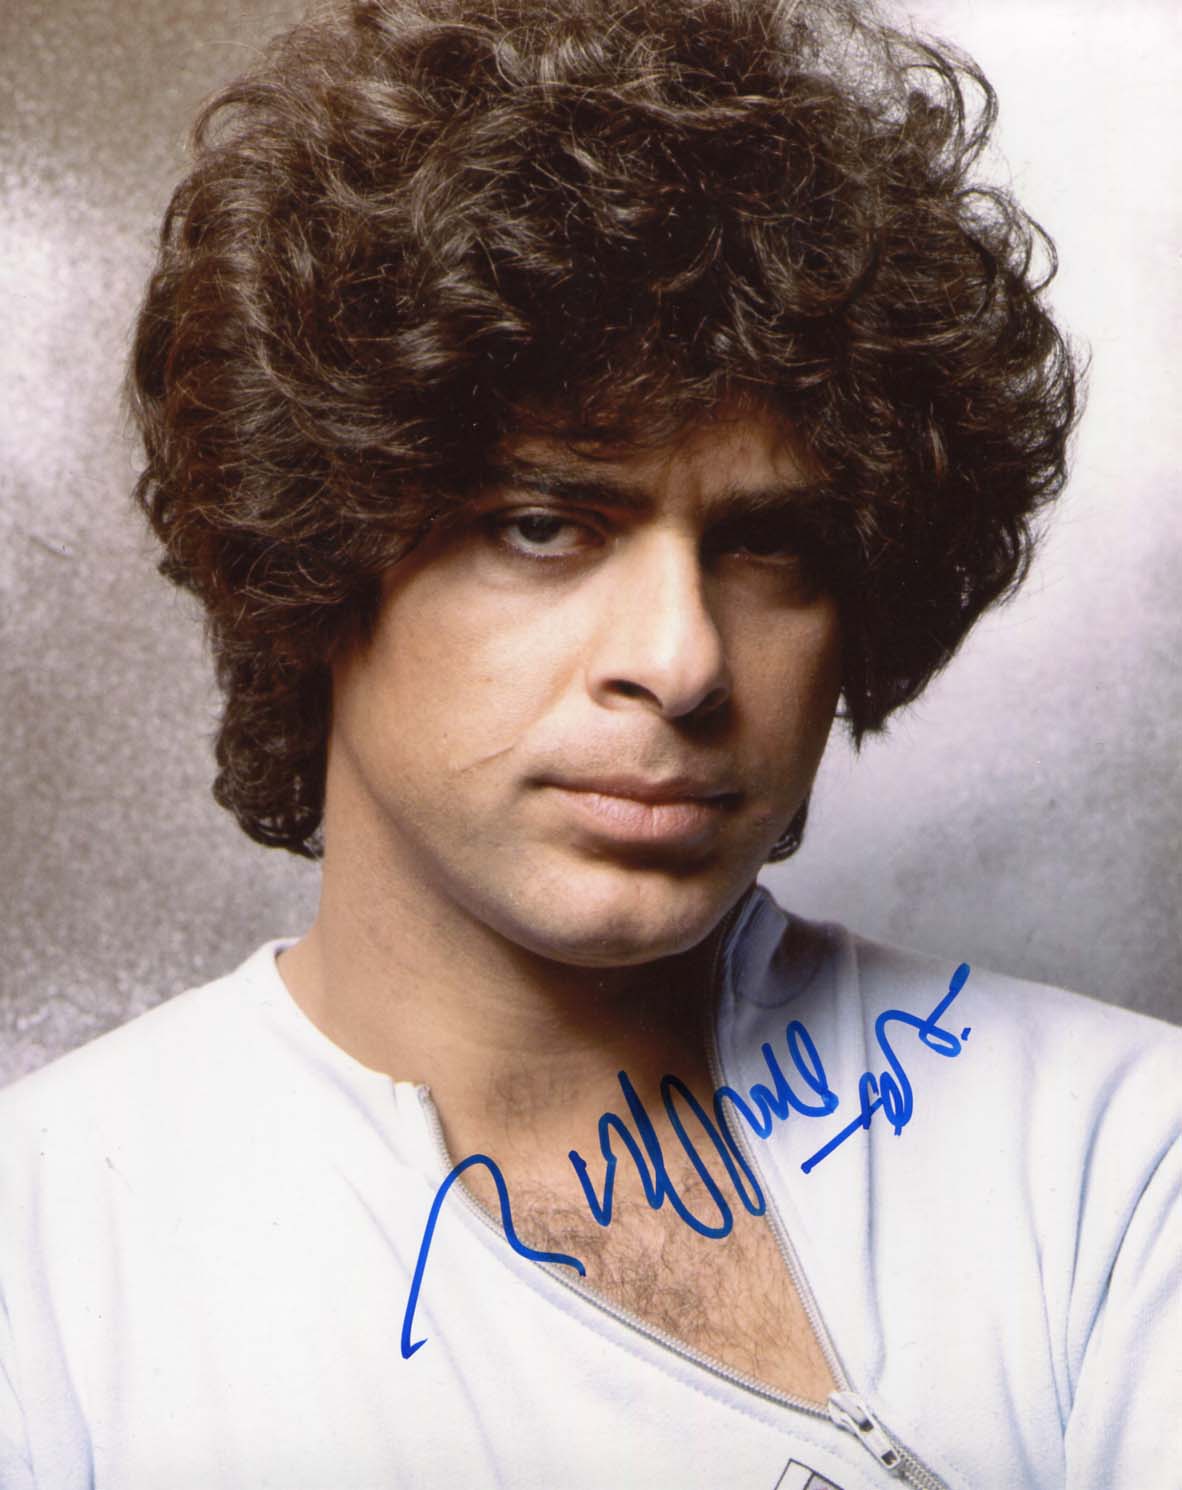 Ricky Shayne Autograph | signed photograph